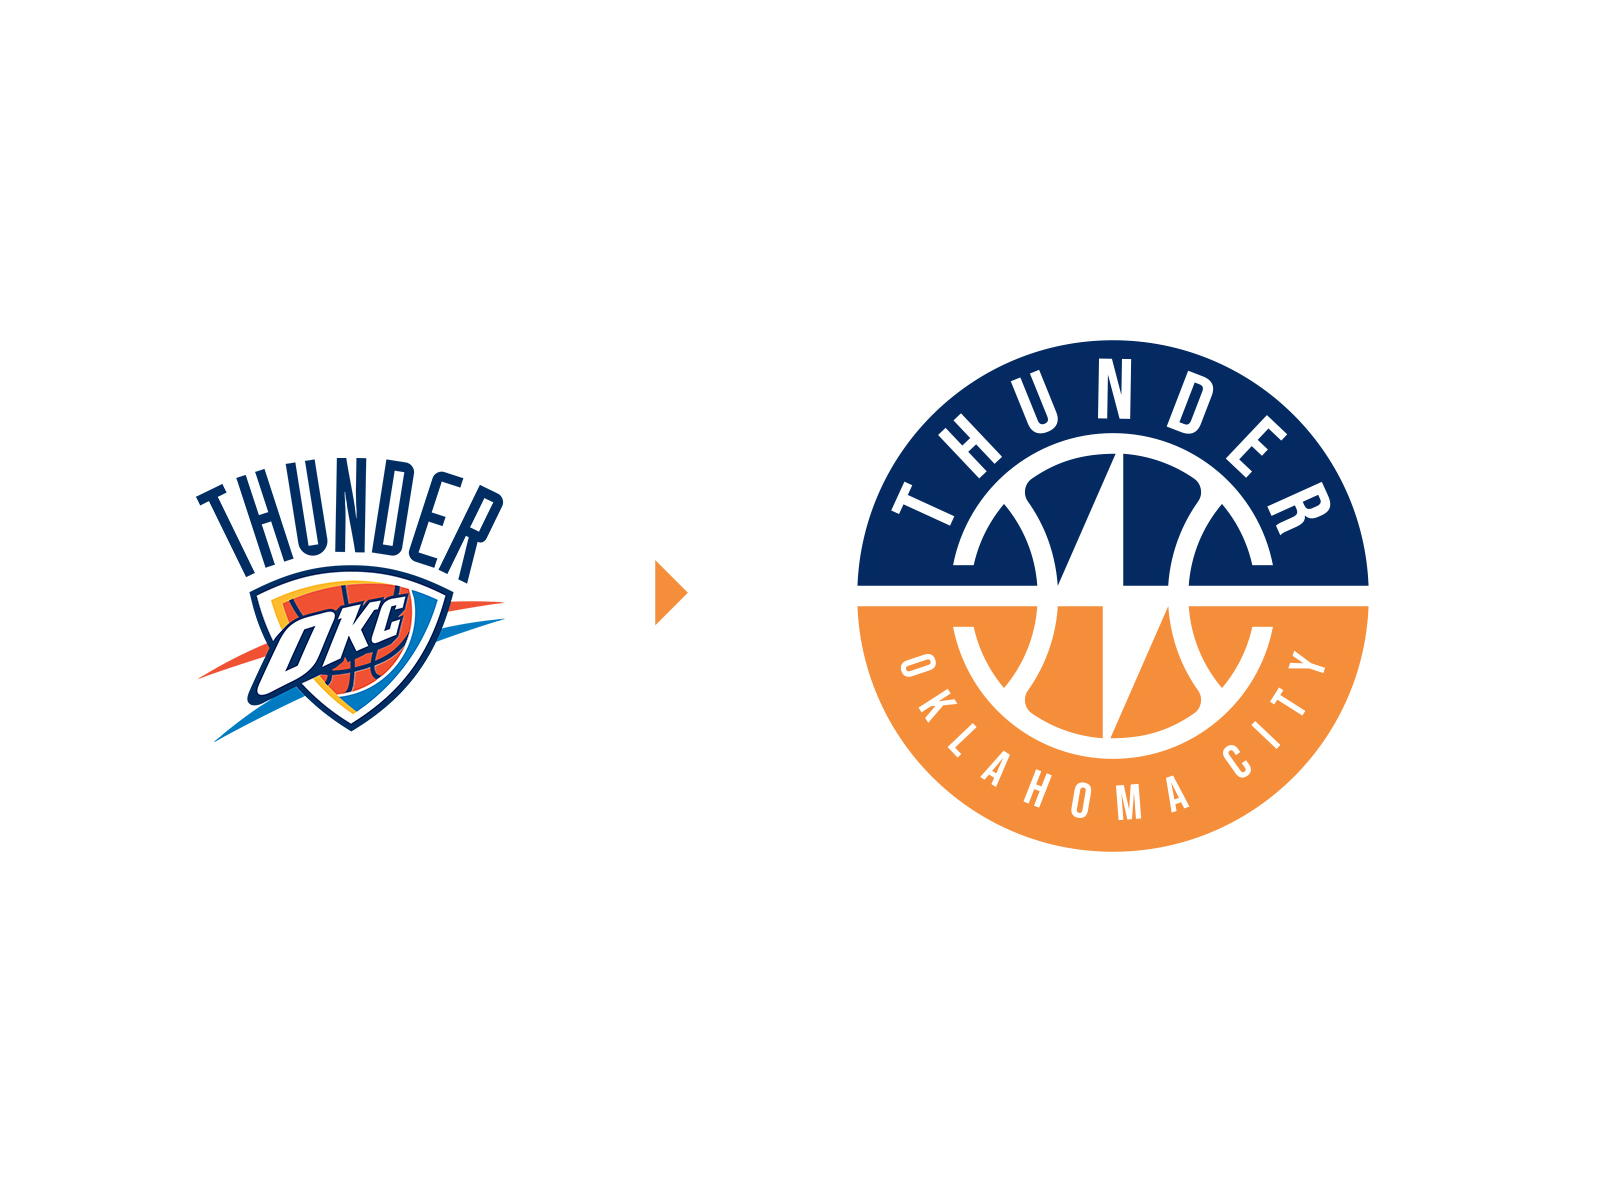 Oklahoma City Thunder (NBA) Logo Redesign by Dalius Stuoka